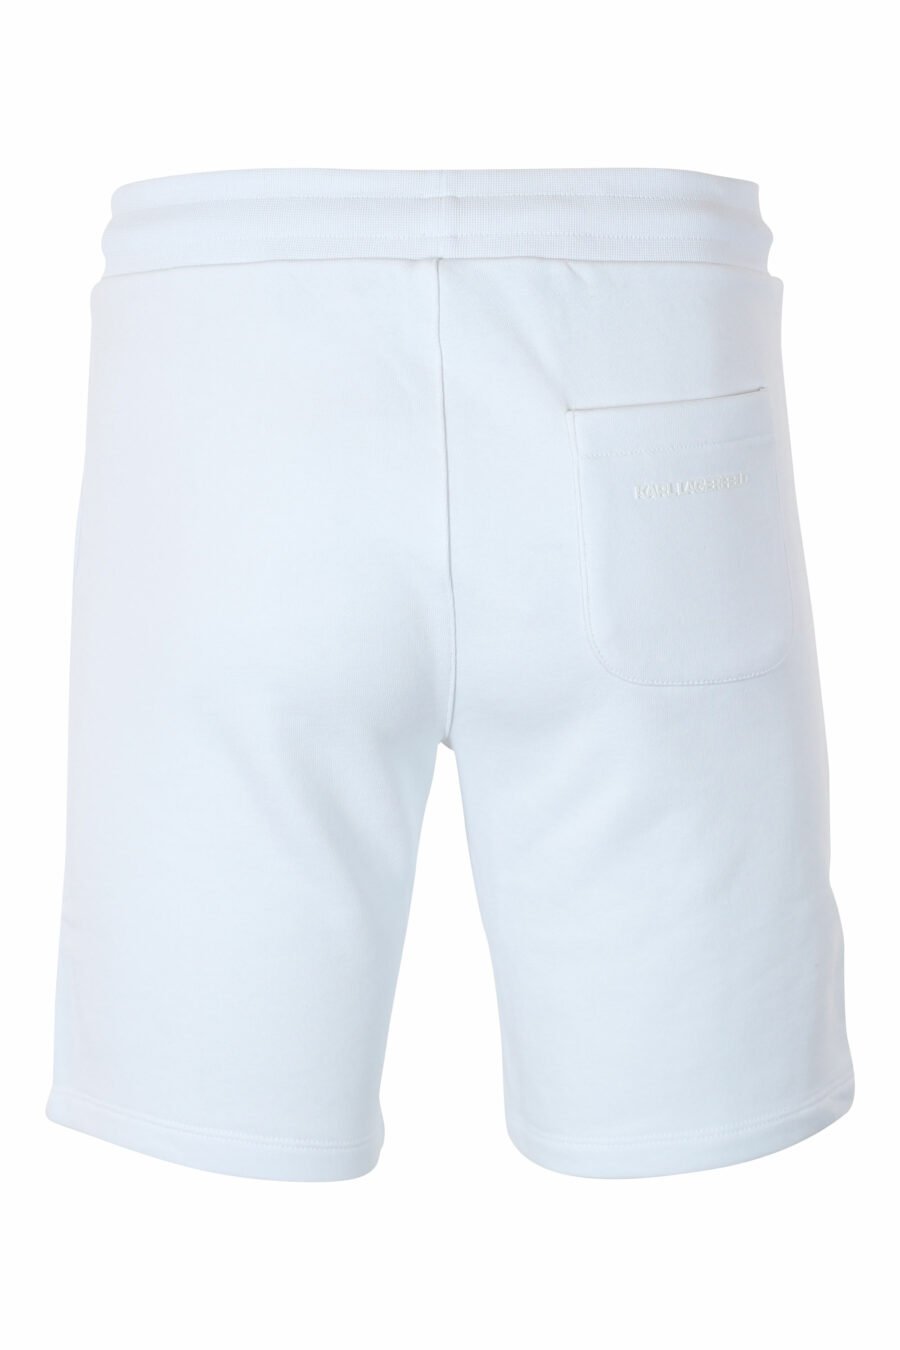 Pantalón de chándal blanco corto con minilogo "rue st guillaume" naranja - IMG 9561